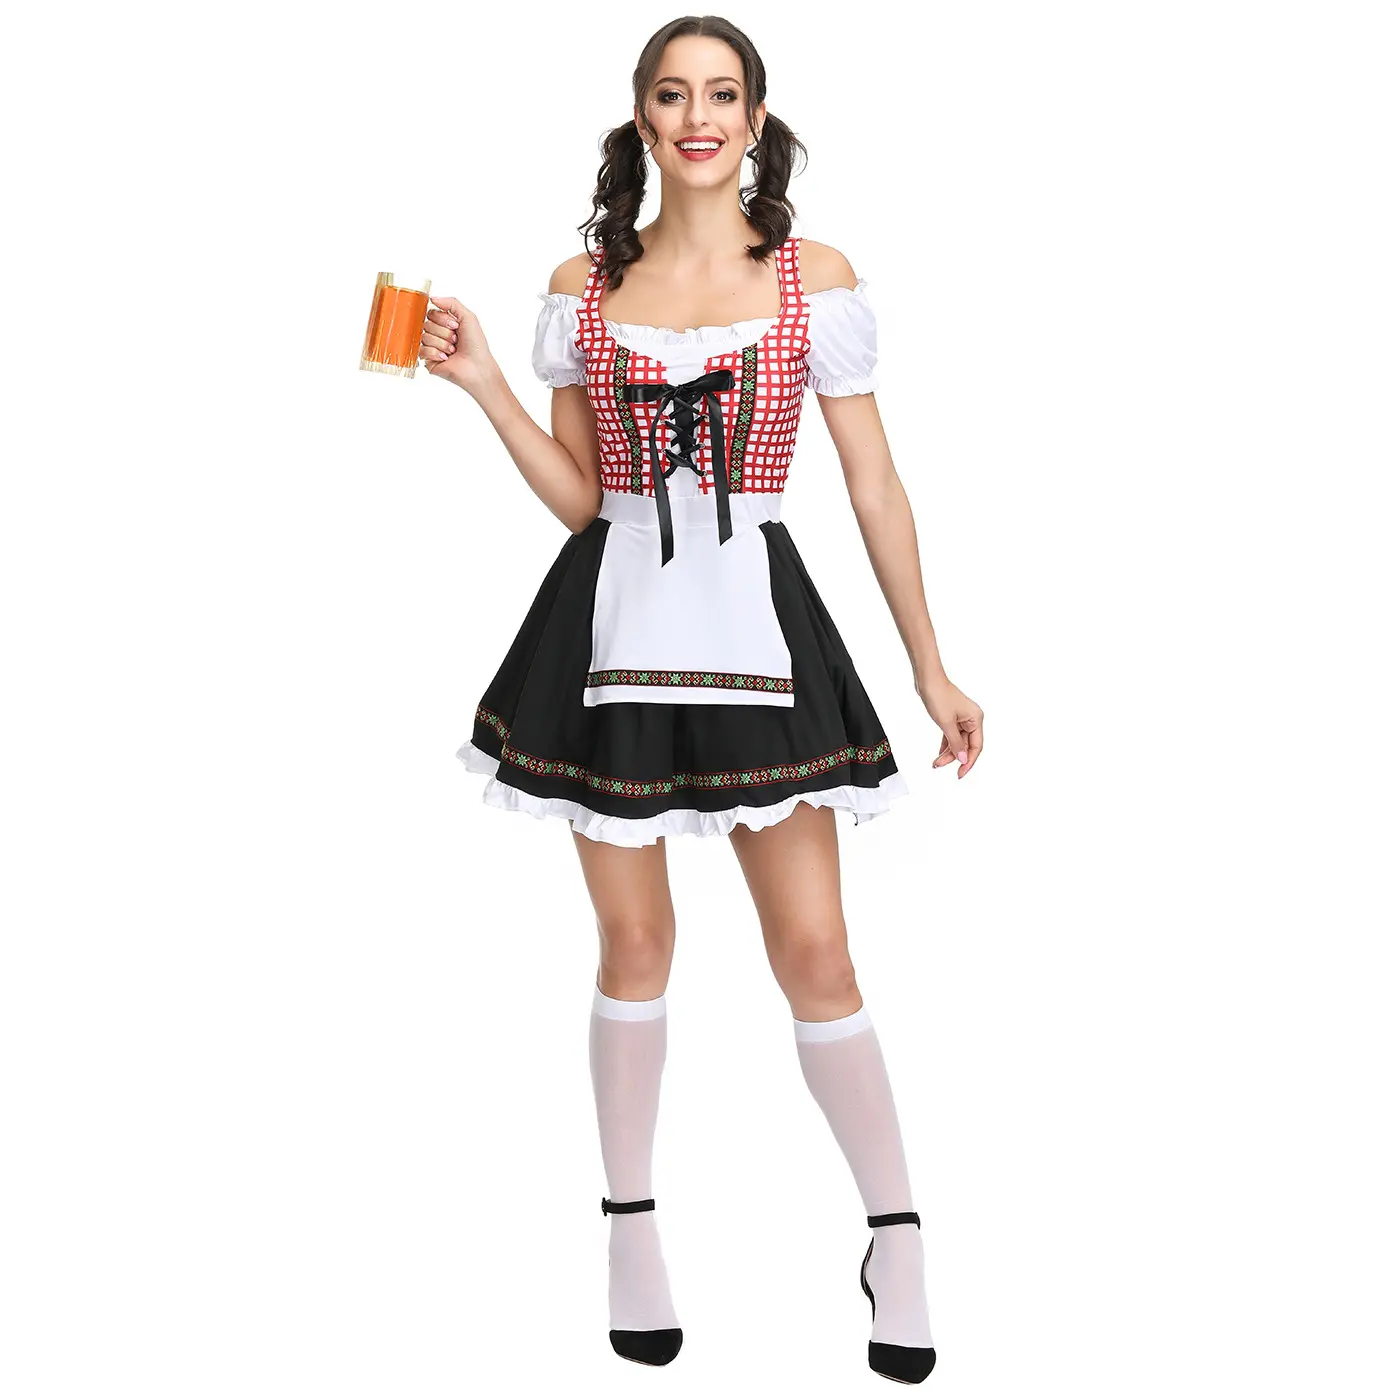 Chinese Factory Oktoberfest Maid Lederhosen Dress Bavarian Beauty Women's Halloween Costume